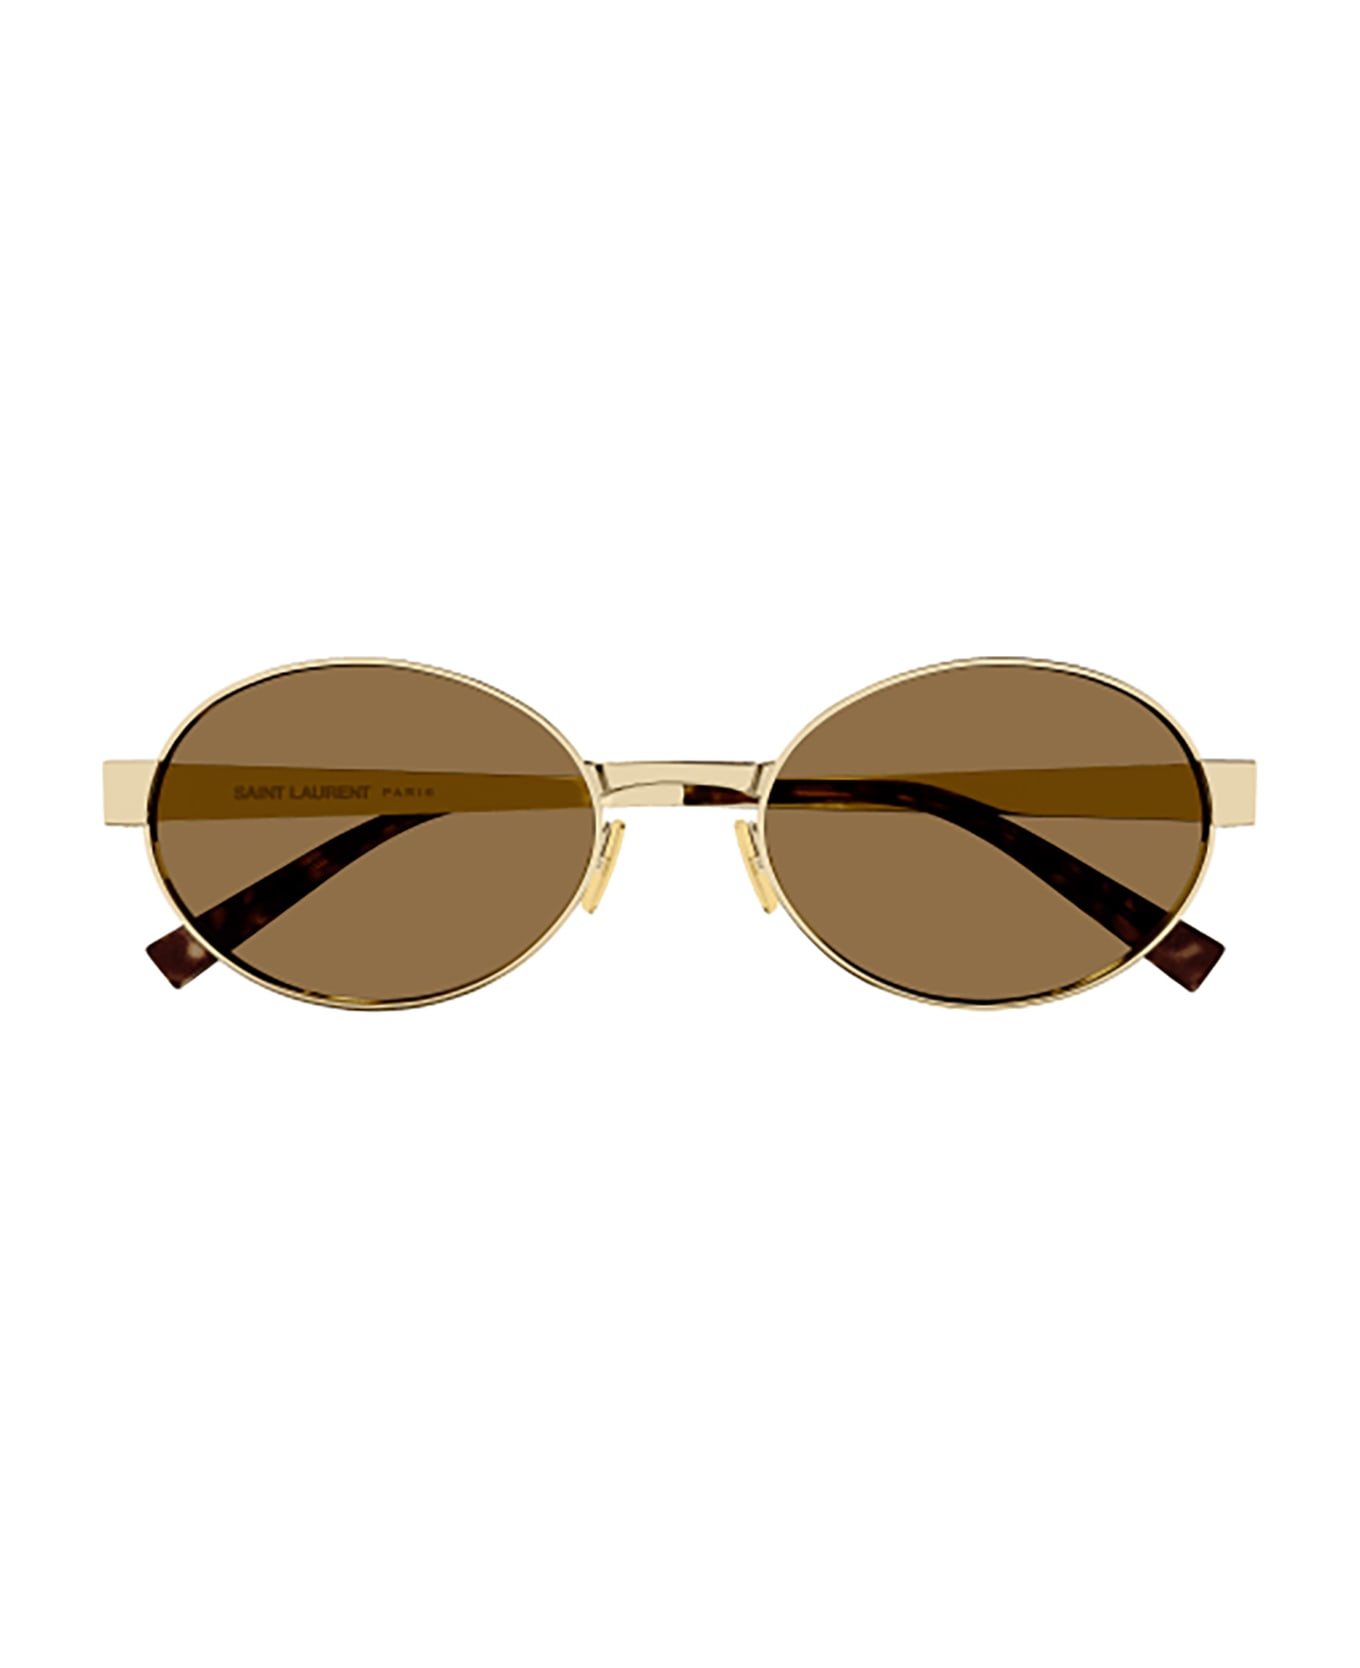 Saint Laurent Eyewear Sl 692 Sunglasses - 004 gold gold brown